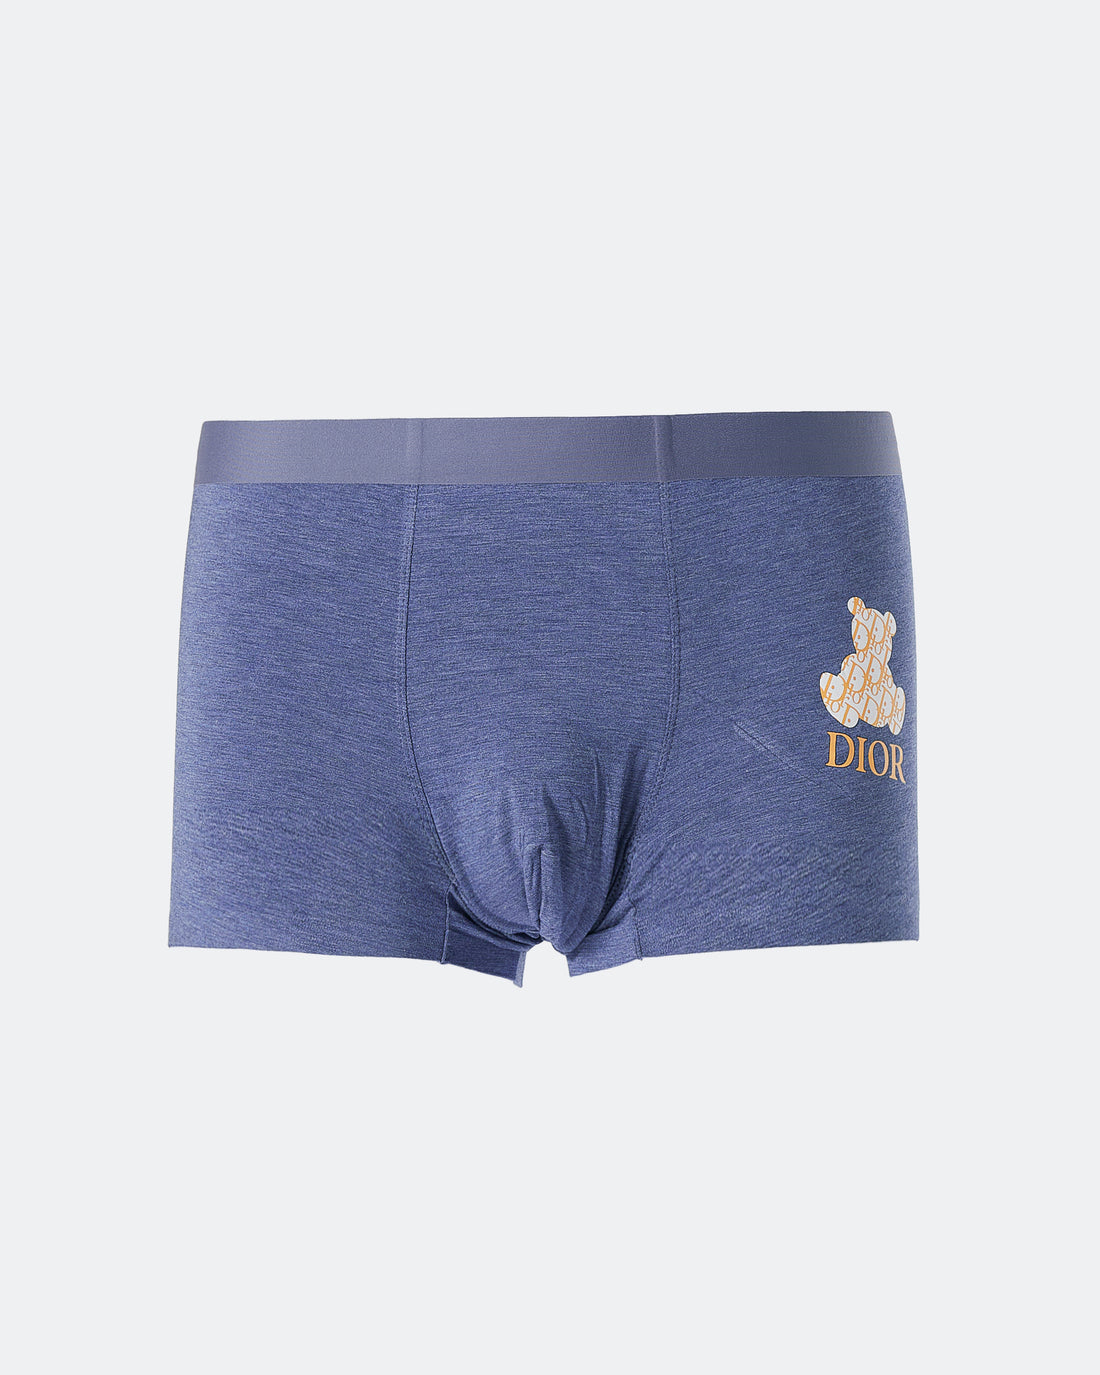 LAC Camo Over Printed Men Underwear 5.90